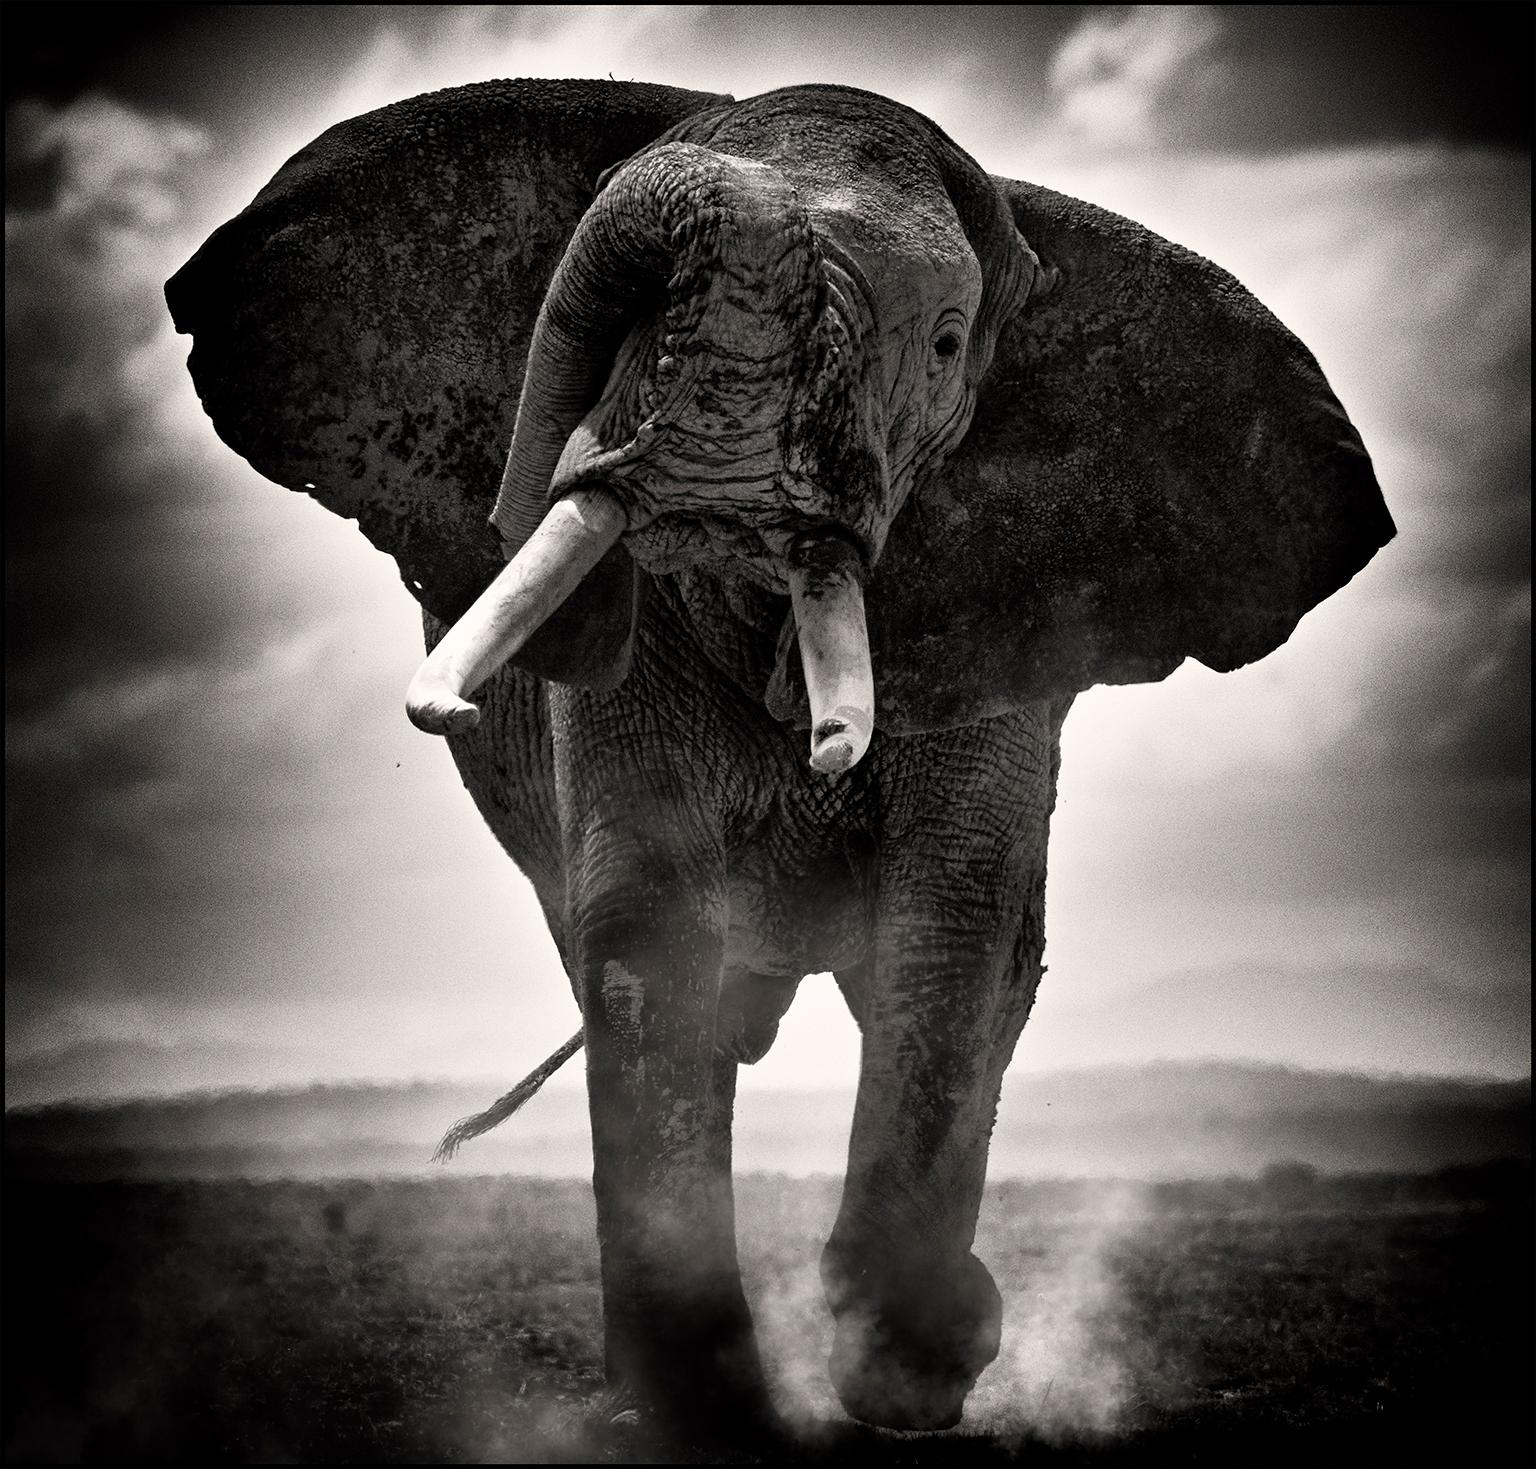 Joachim Schmeisser Black and White Photograph - POWER II, animal, wildlife, black and white photography, elephant, africa